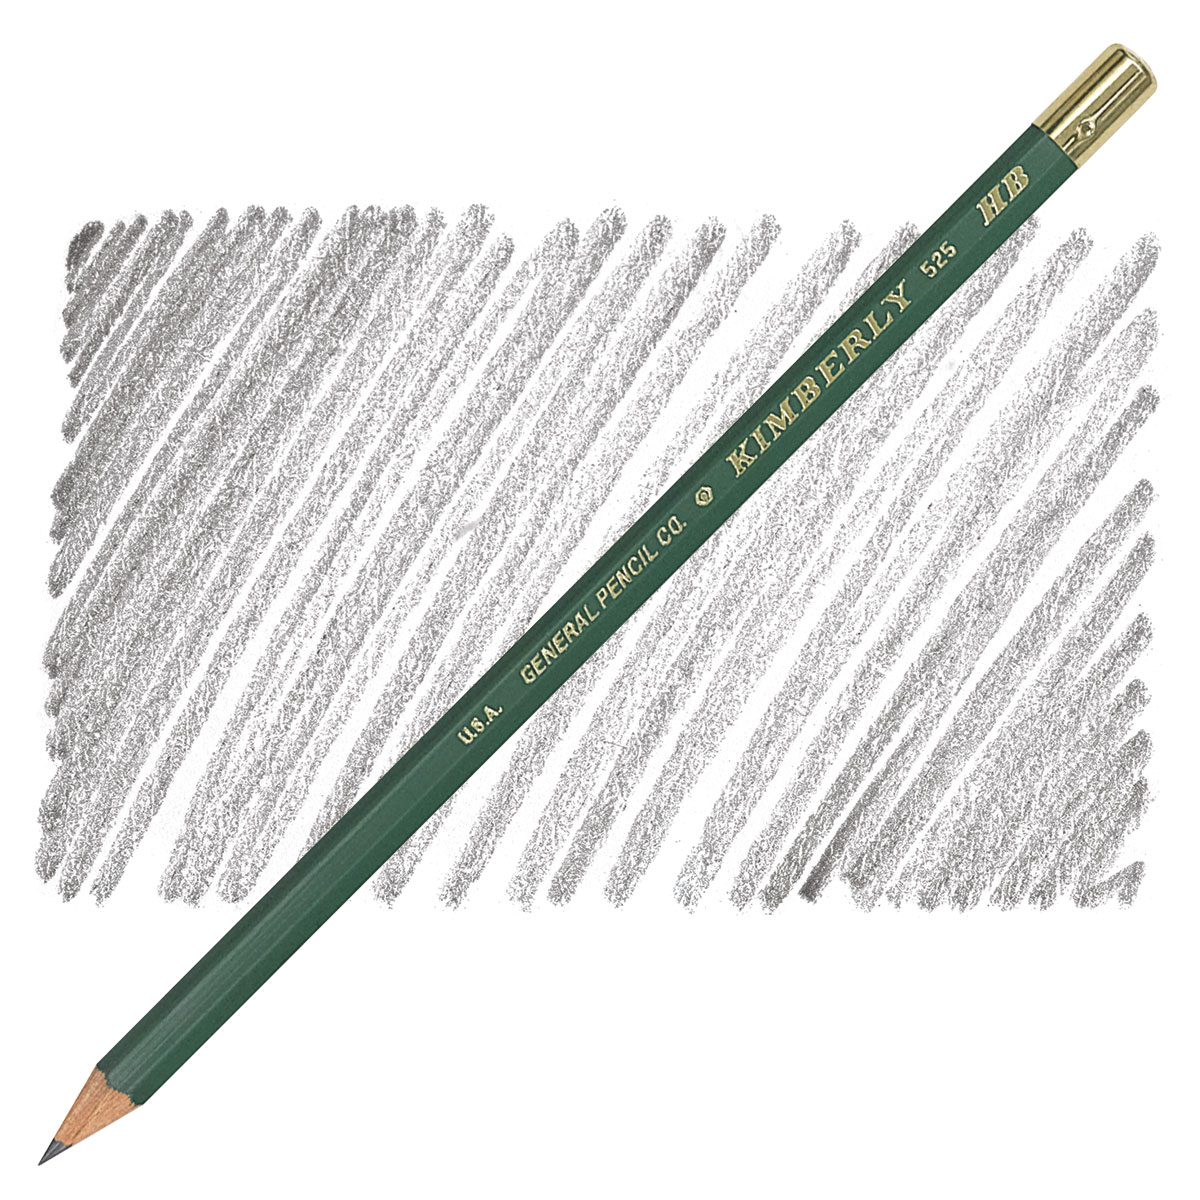 General Pencil Kimberly Drawing Pencil, H